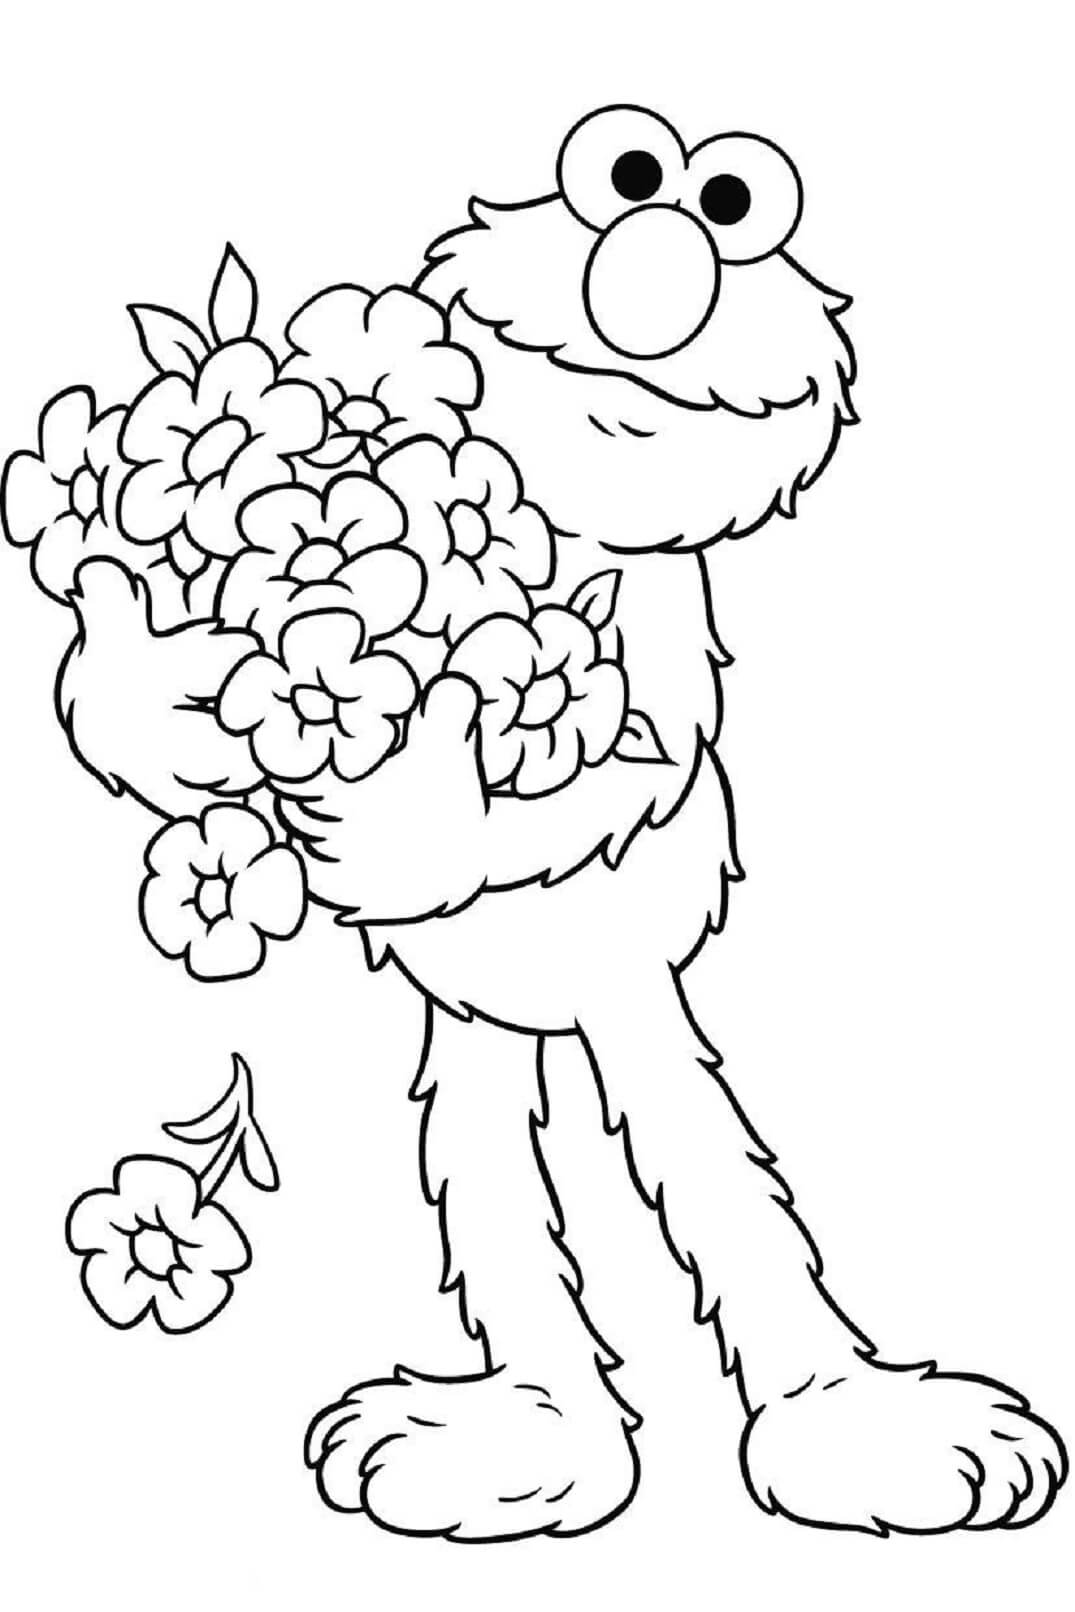 Dibujos de Elmo Con Flores para colorear